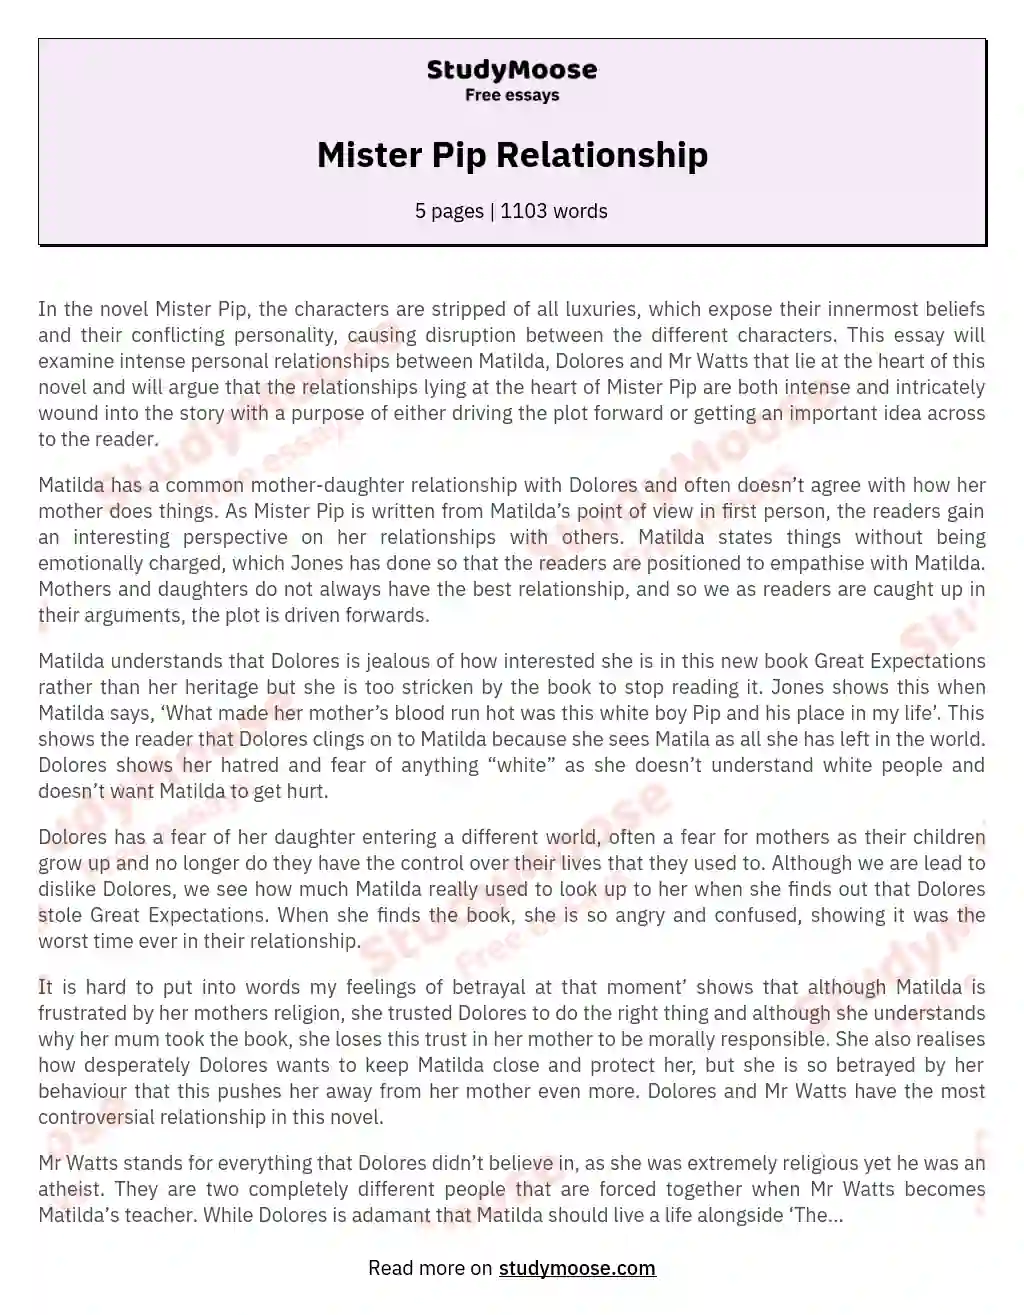 Mister Pip Relationship essay